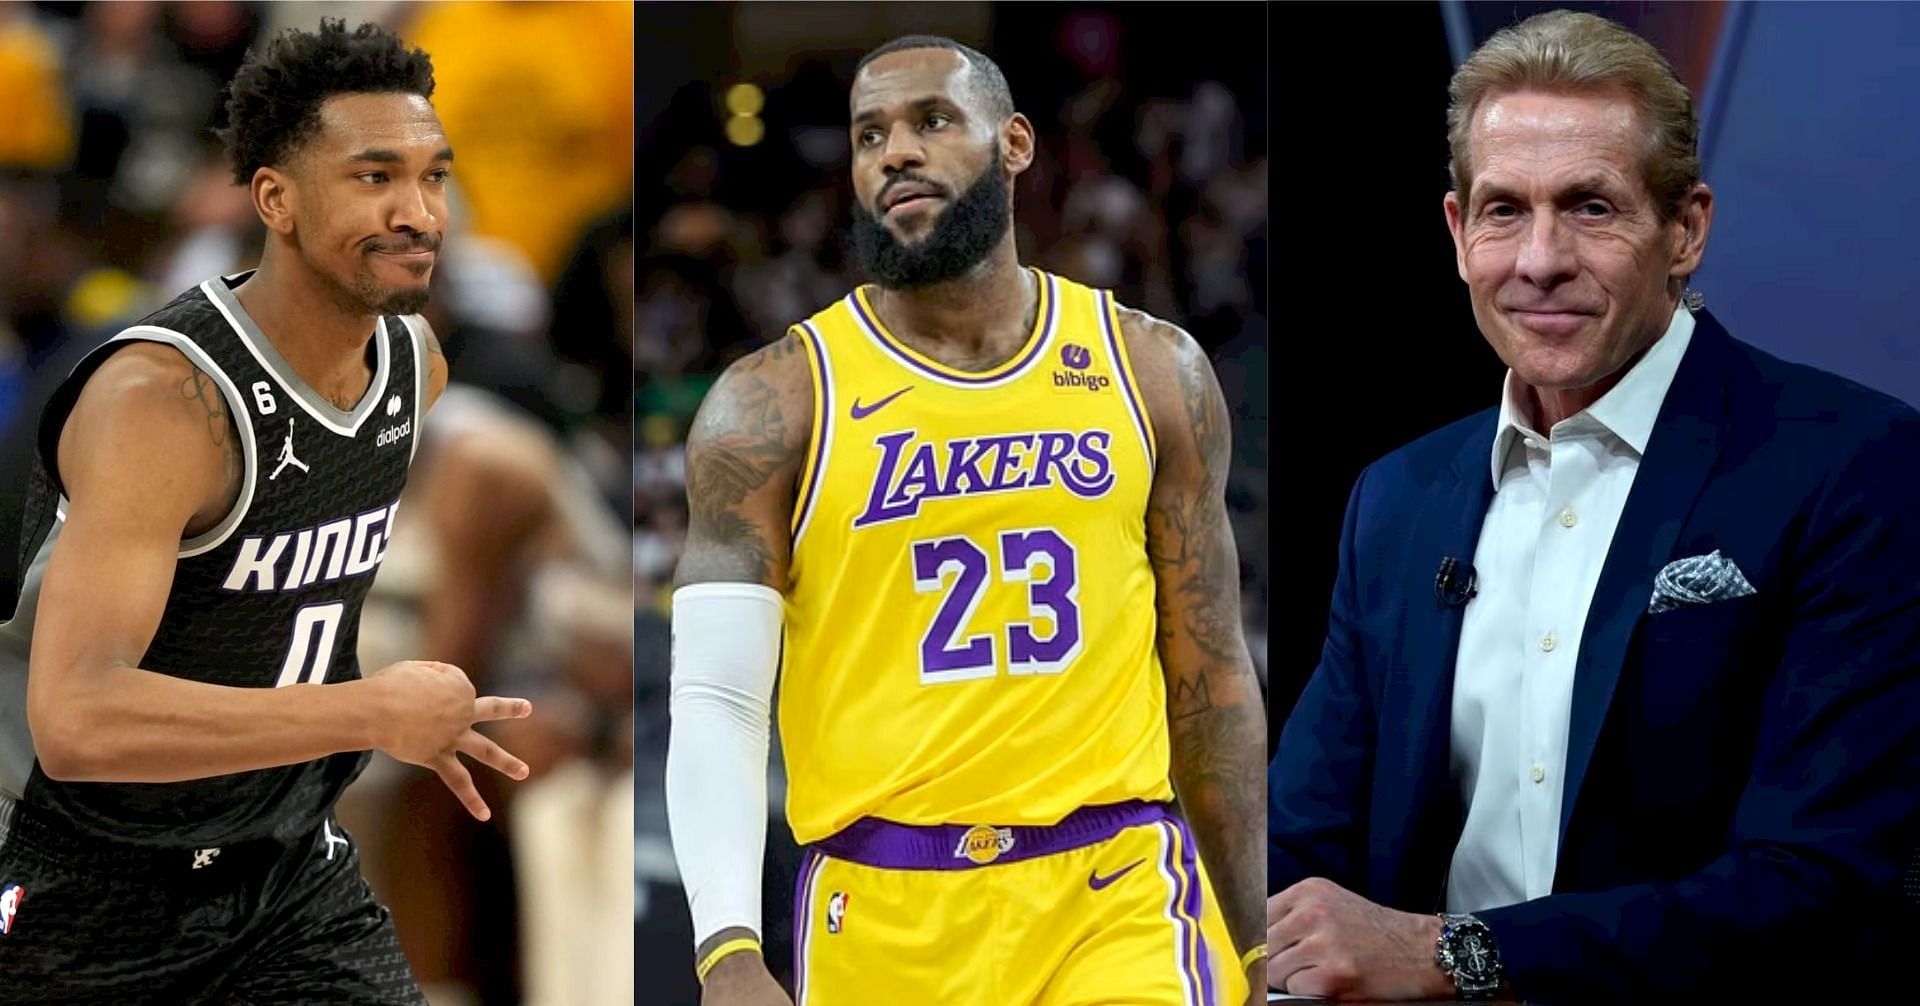 Sacramento Kings guard Malik Monk, LA Lakers superstar forward LeBron James and FS1 analyst Skip Bayless